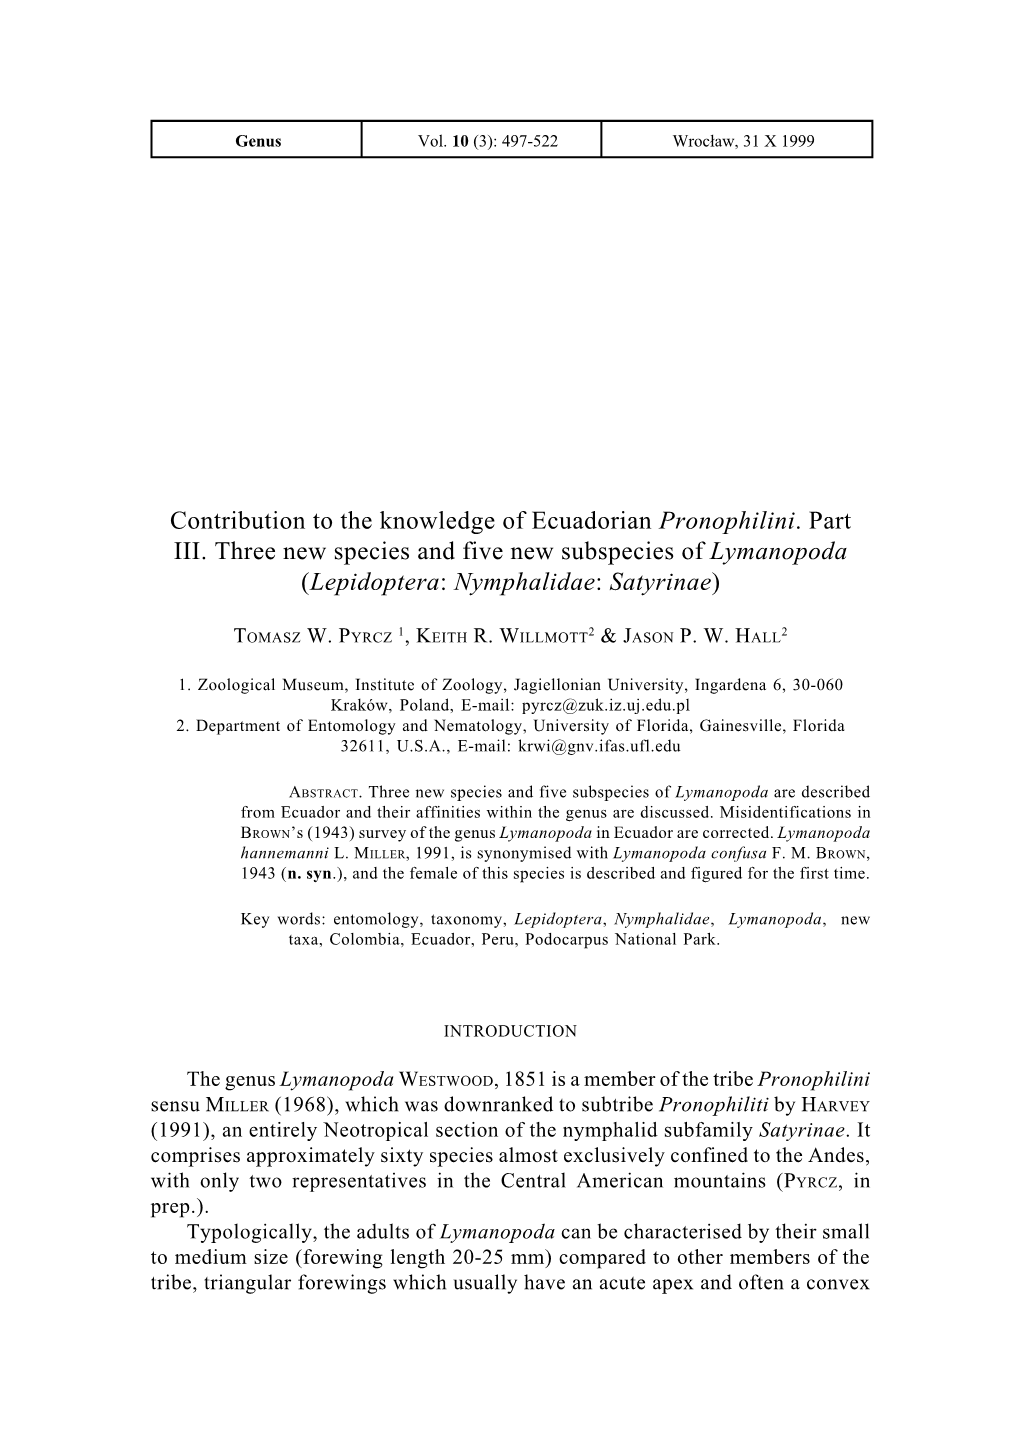 Contribution to the Knowledge of Ecuadorian Pronophilini. Part III